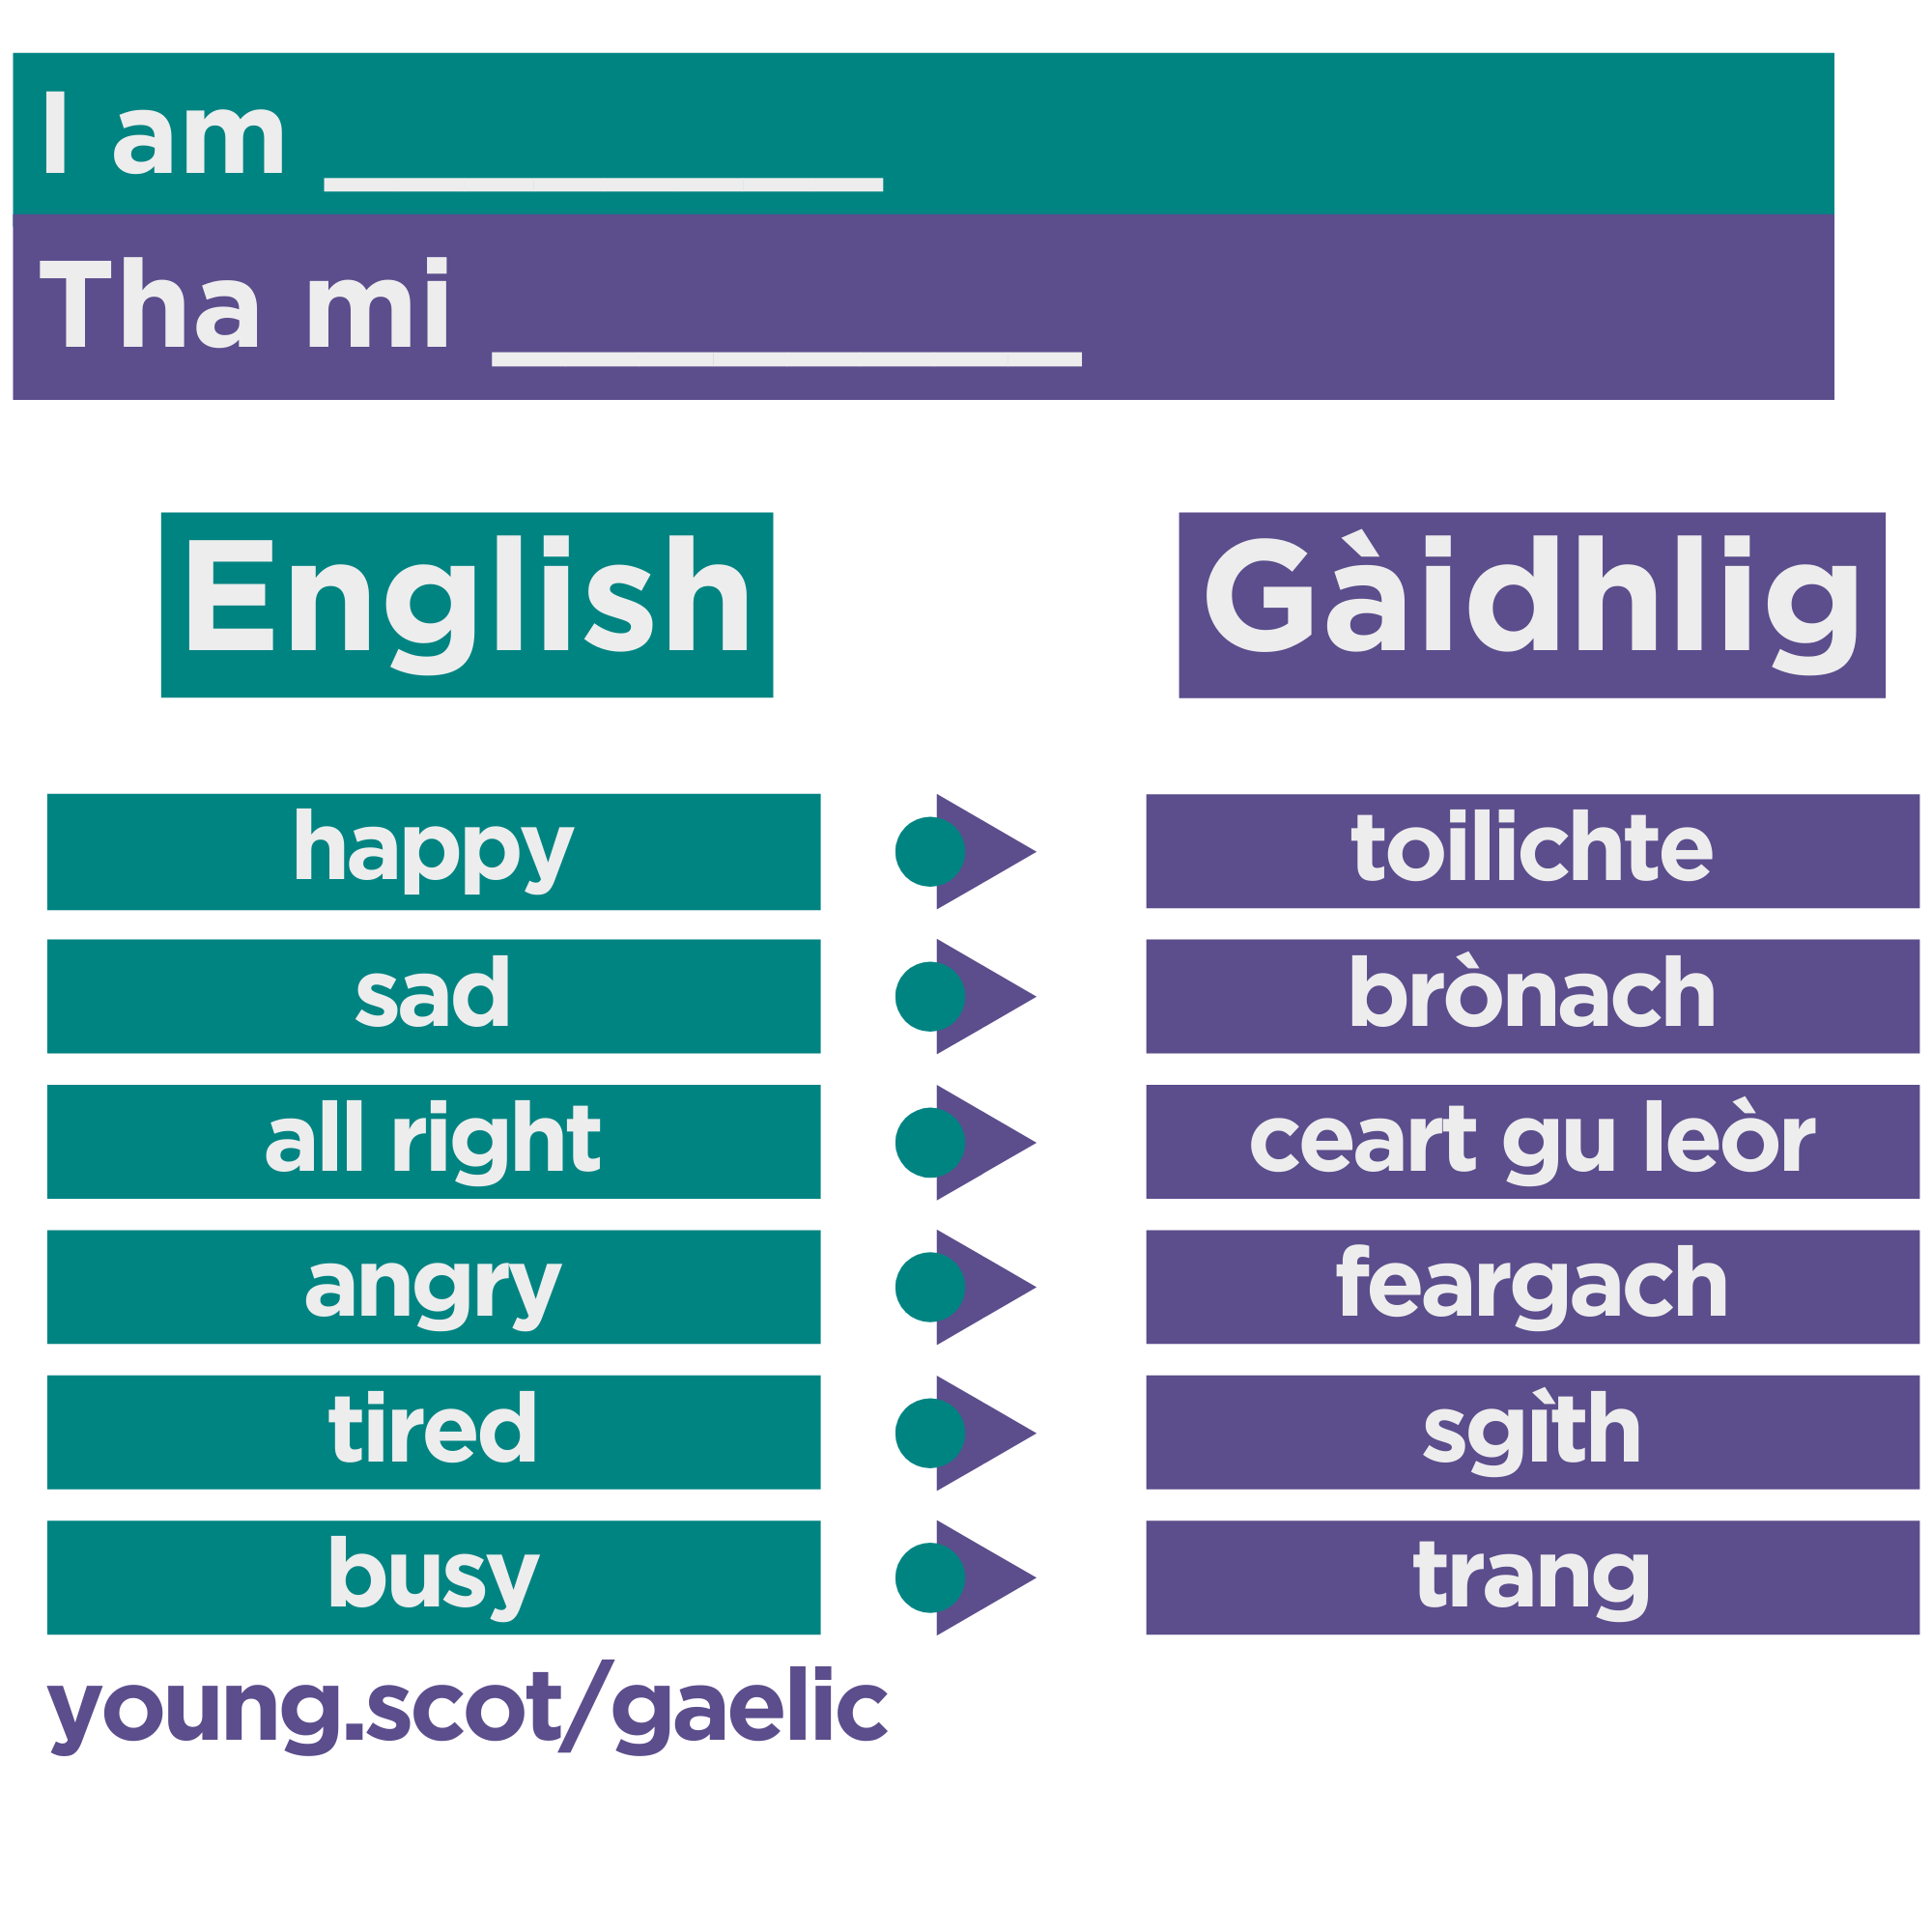 A vocabualary list of gaelic words